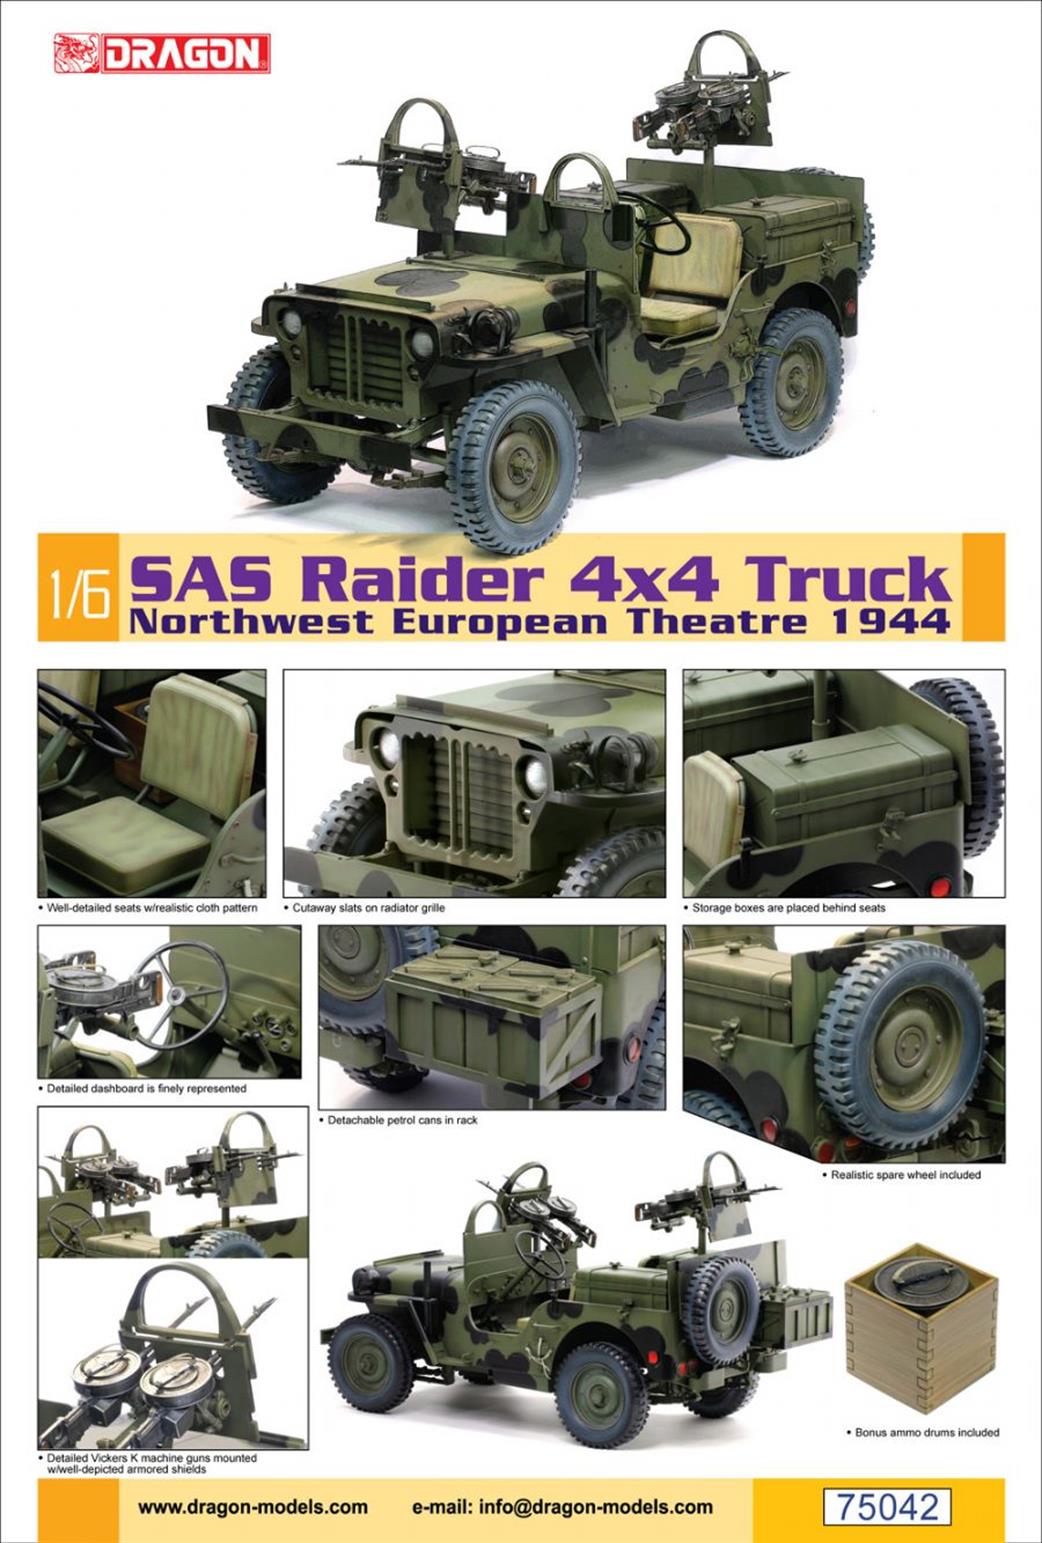 Dragon Models 1/6 75042 SAS Raider Truck 4 x 4 Nortwest Europe 1944 Plastic Kit